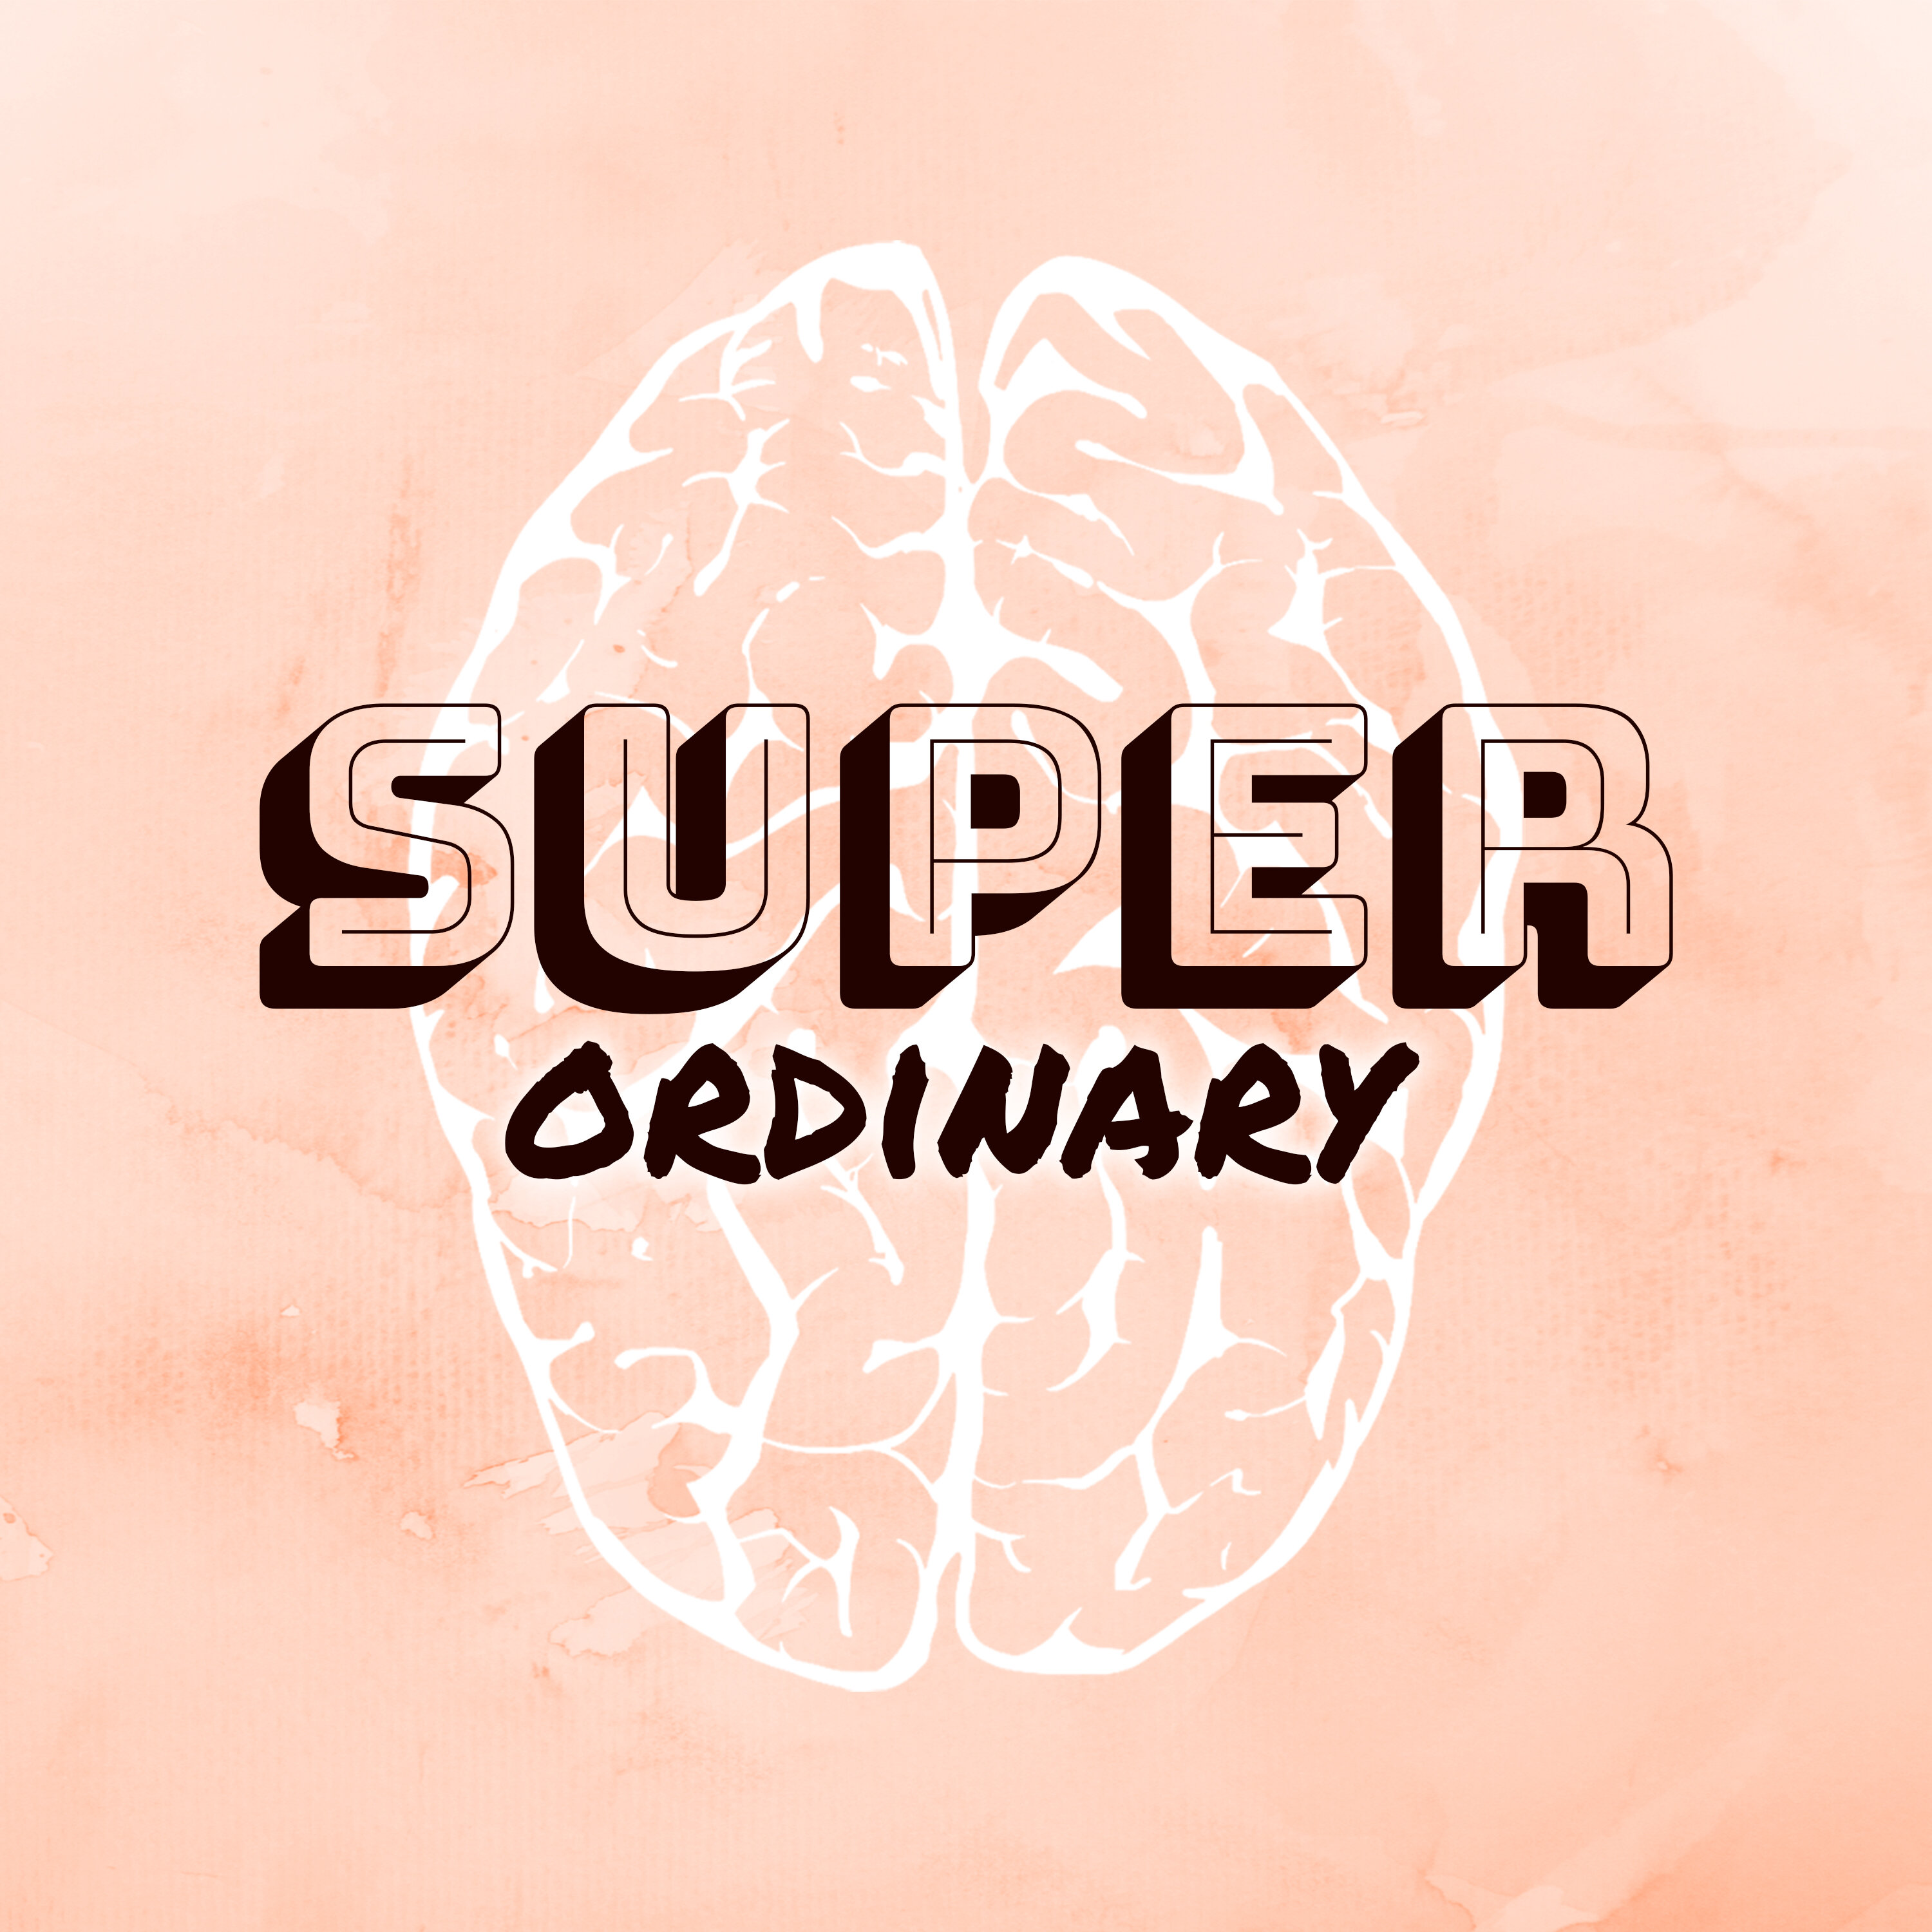 "Super Ordinary" Podcast